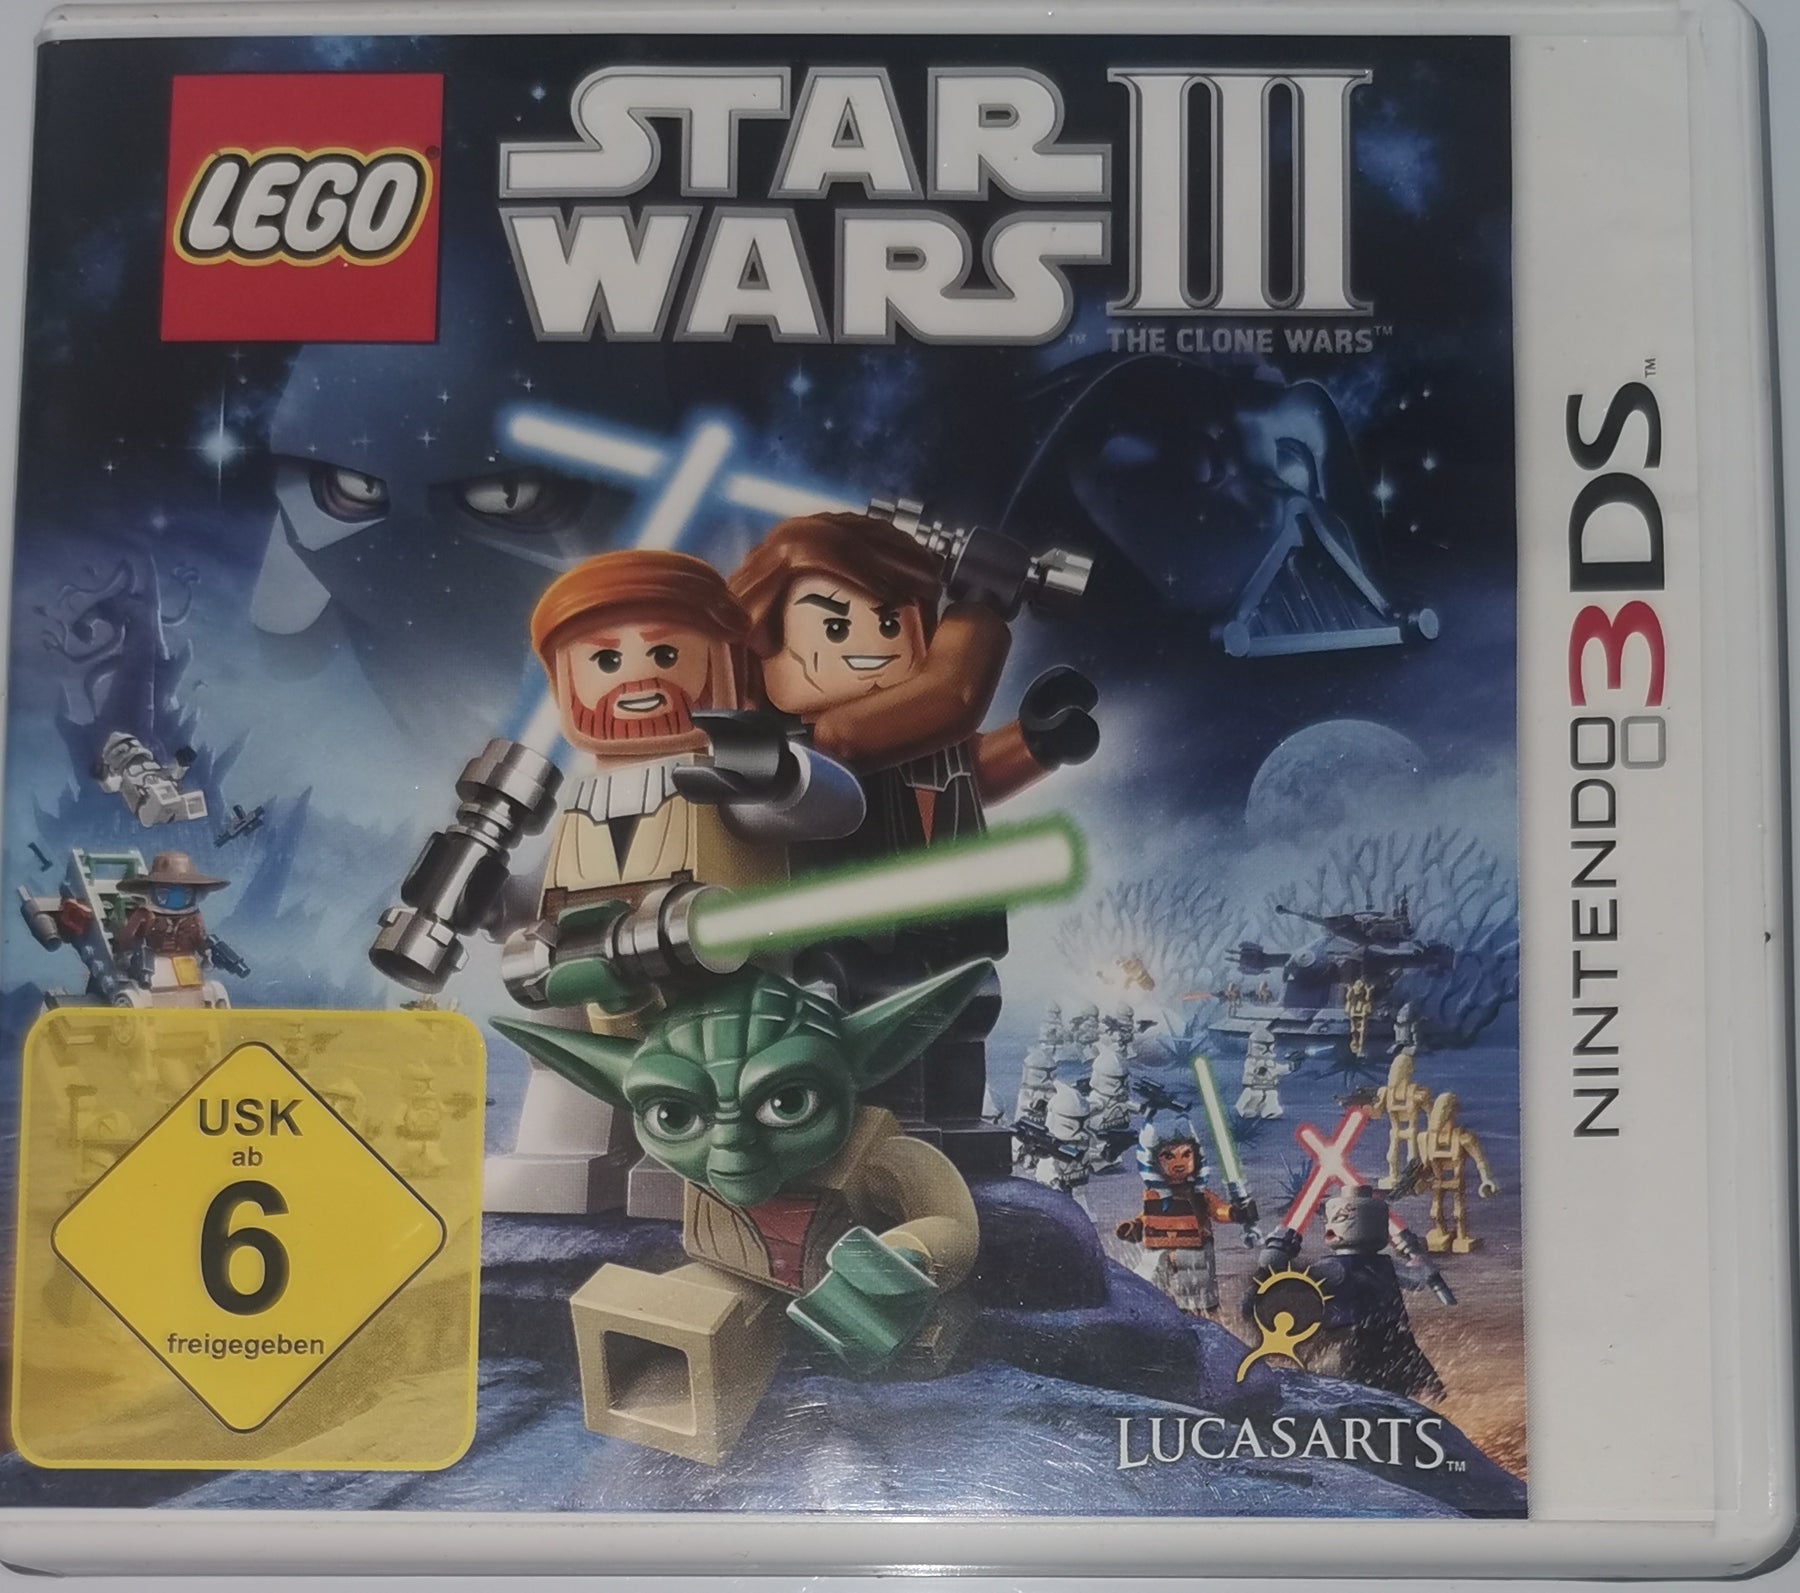 Lego Star Wars 3 The Clone Wars Software Pyramide Nintendo DS (Nintendo 3DS) [Neu]